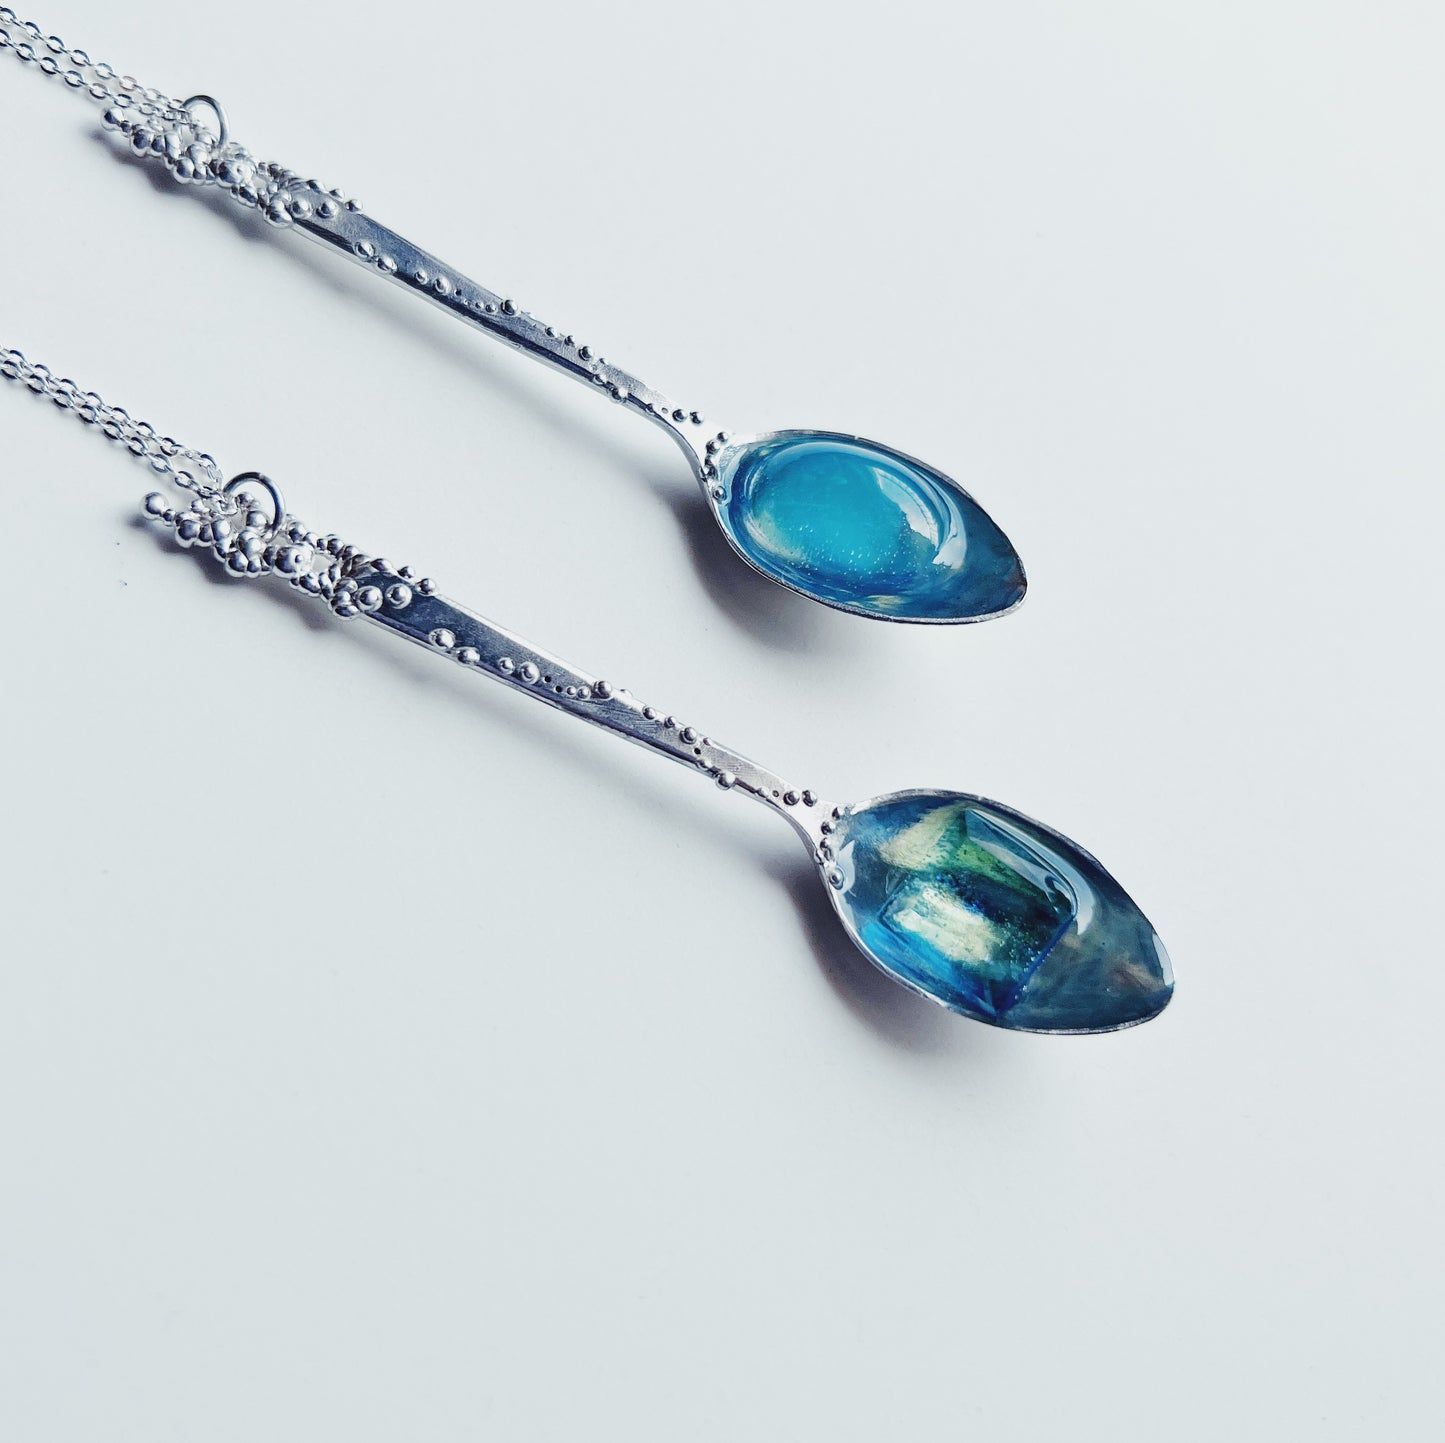 Spoon pendant -silver type-